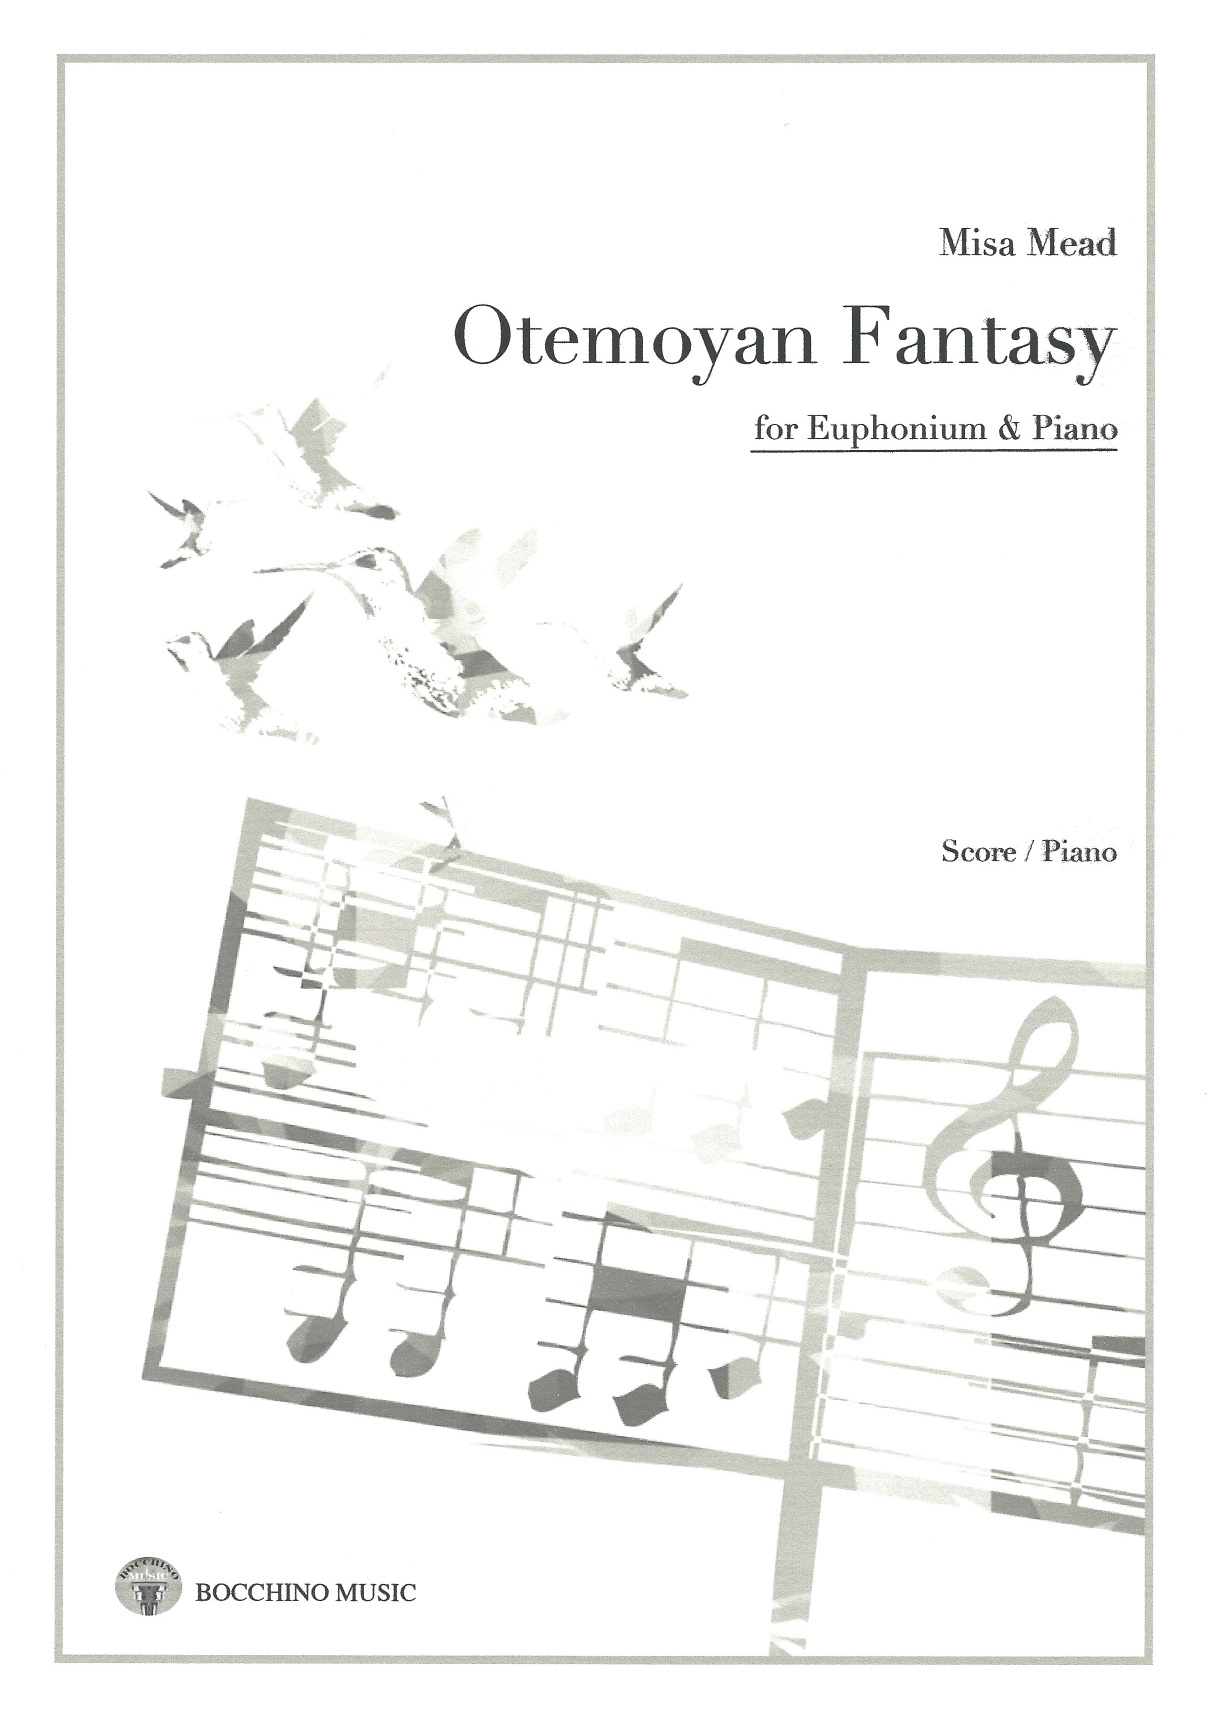 Otemoyan Fantasy - Misa Mead - for euphonium and piano